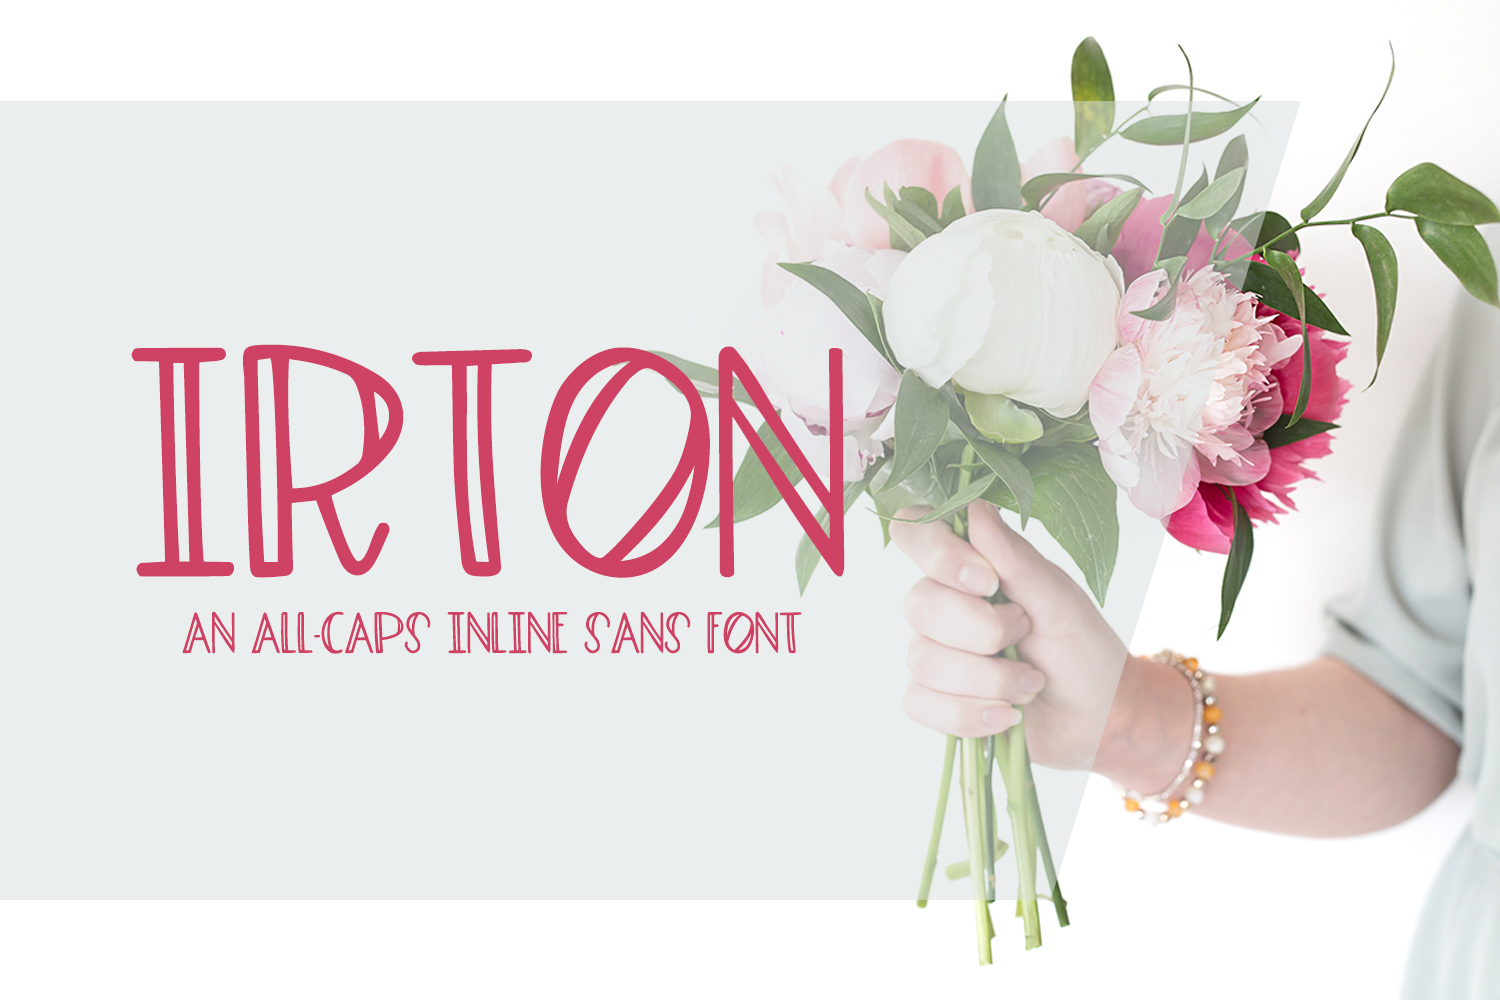 Irton Inline Font